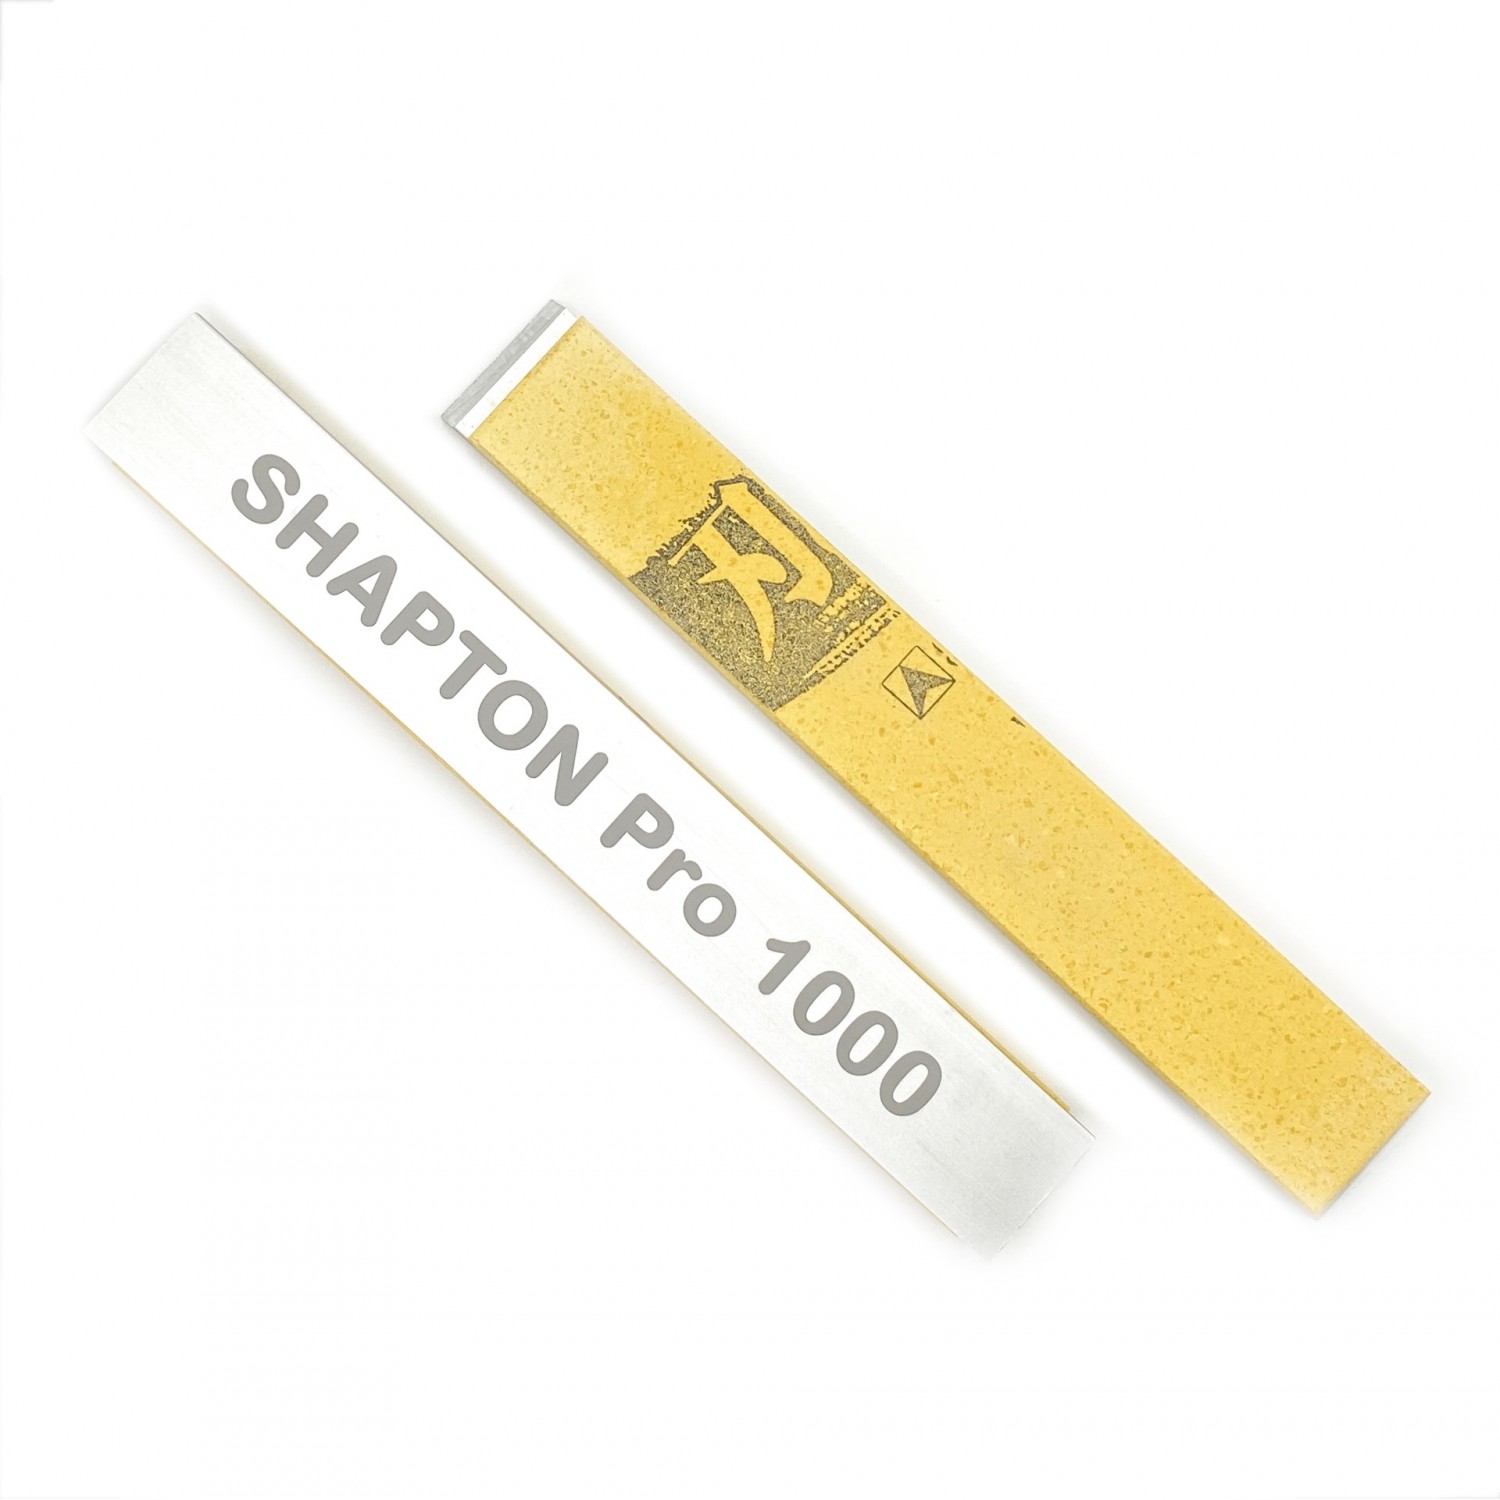 Shapton Professional #1000